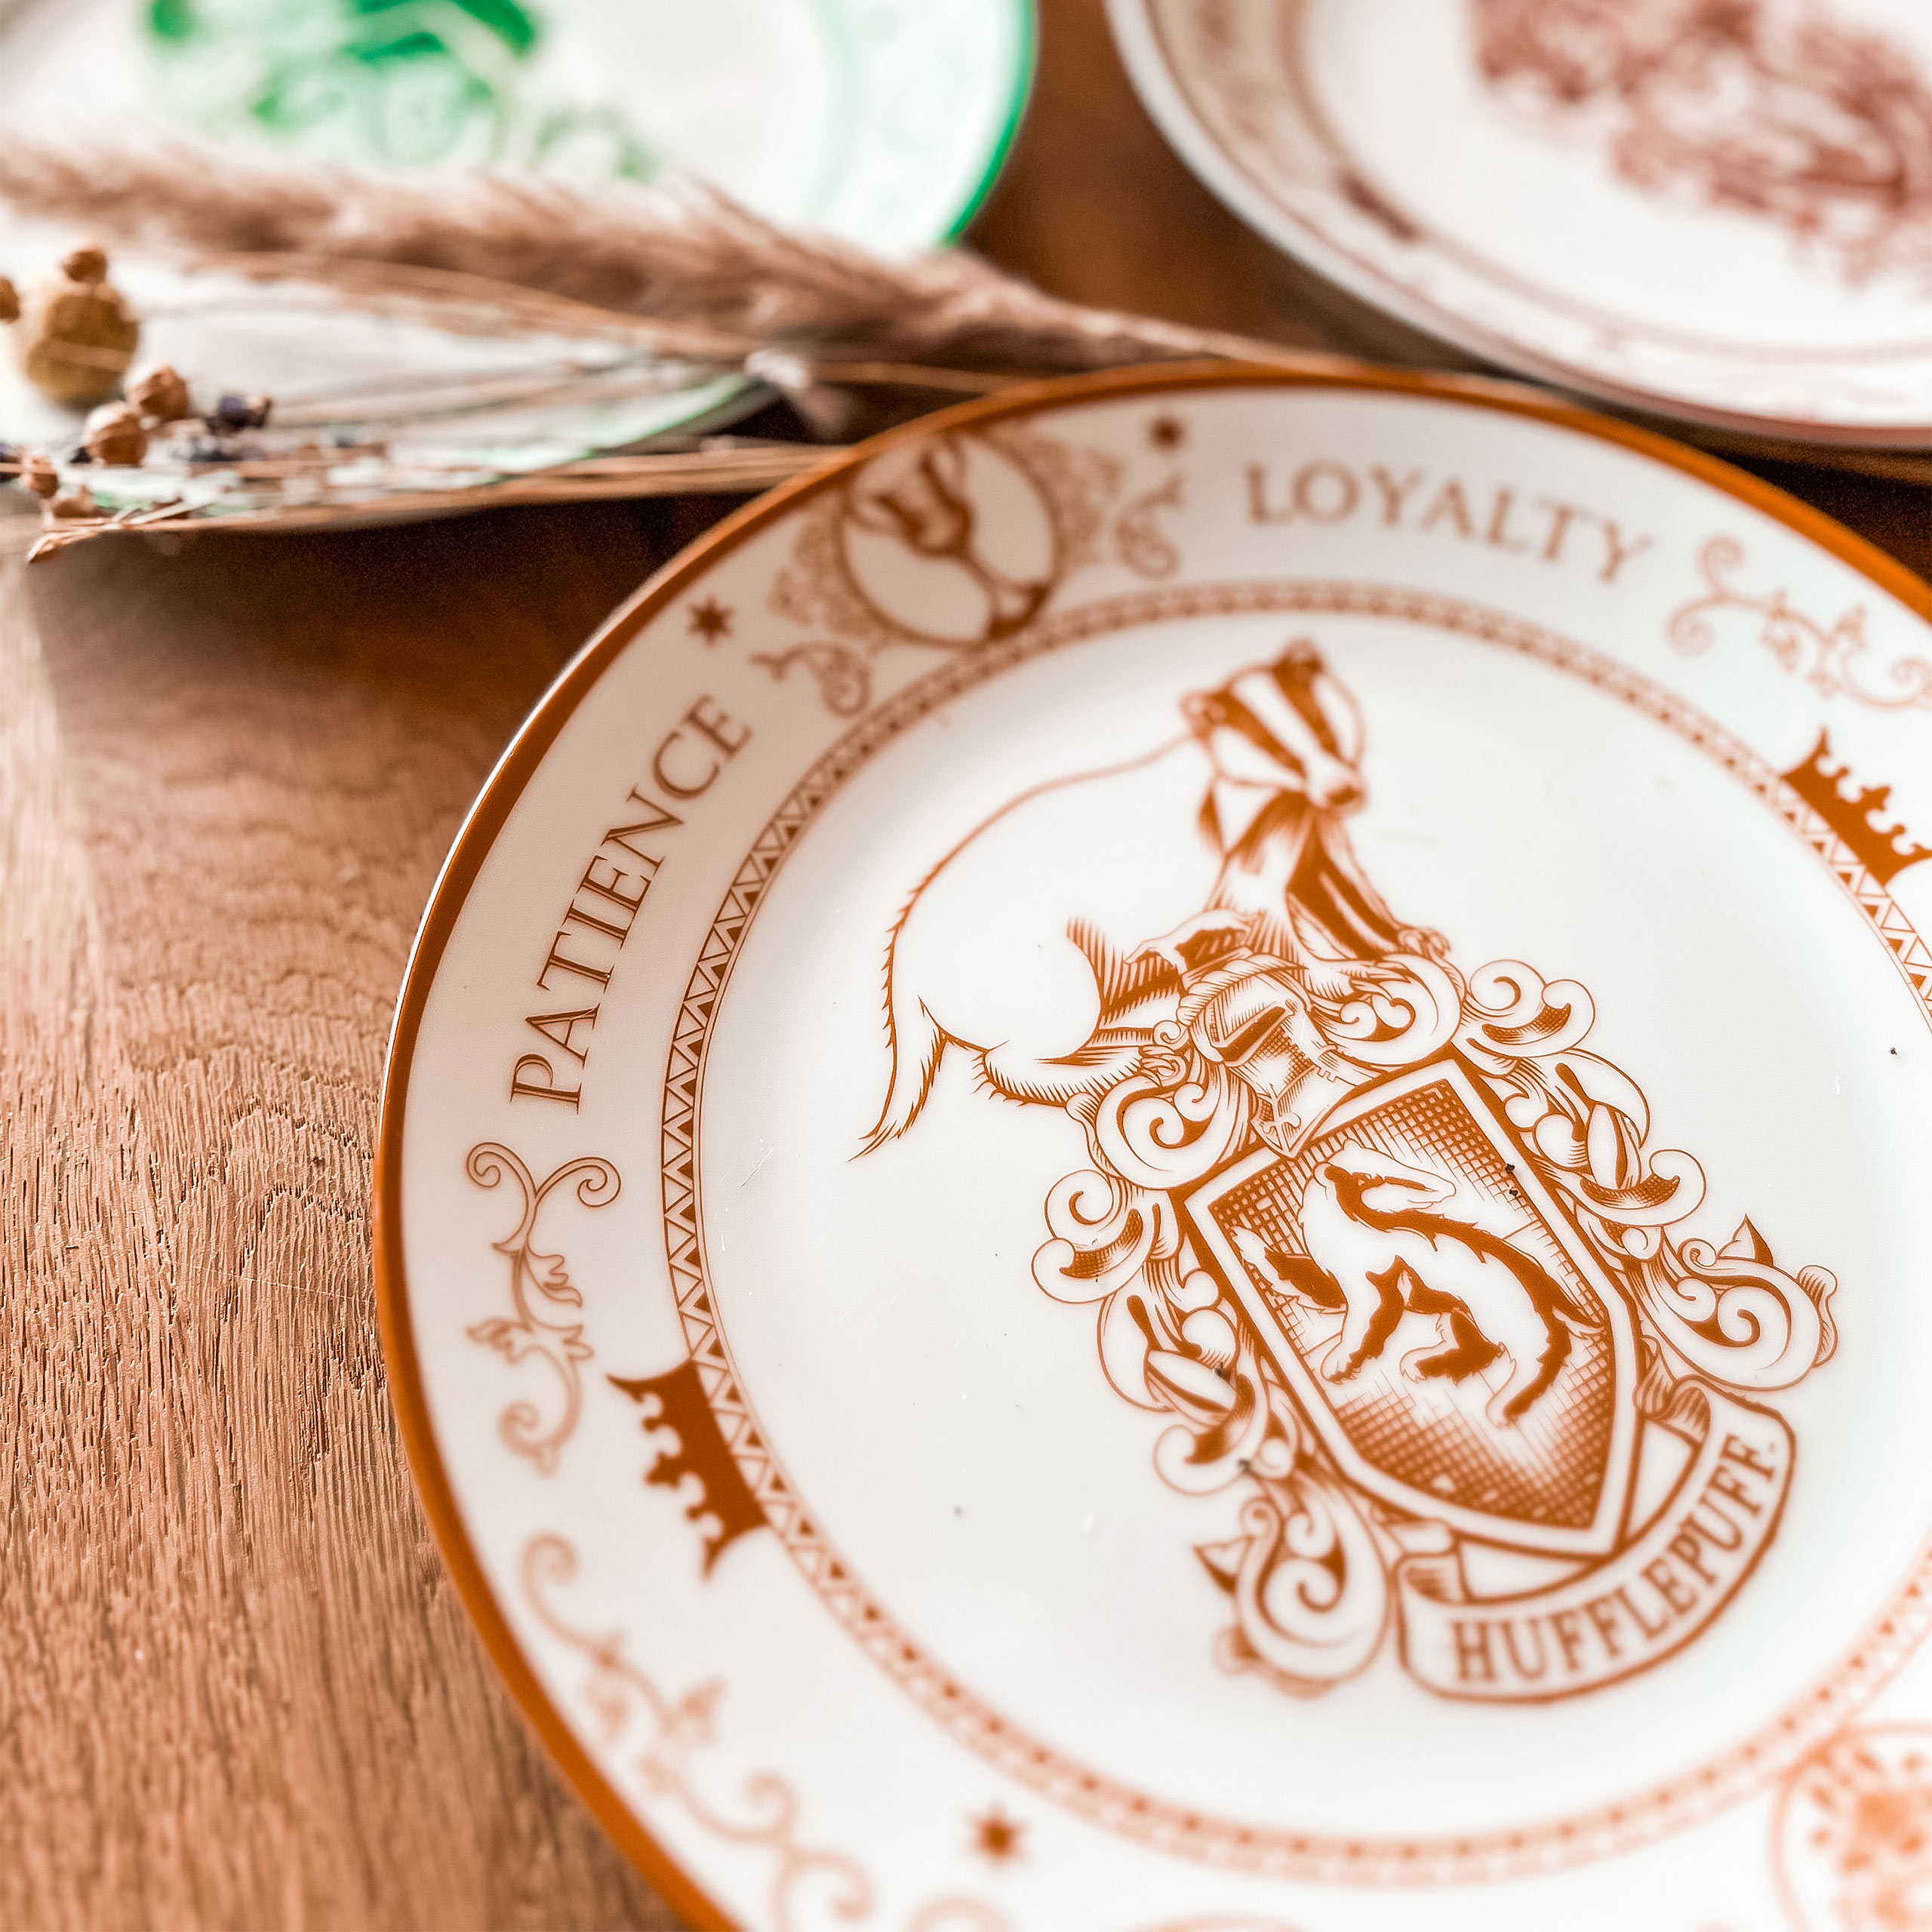 Harry Potter - Hogwarts Houses Plate Set